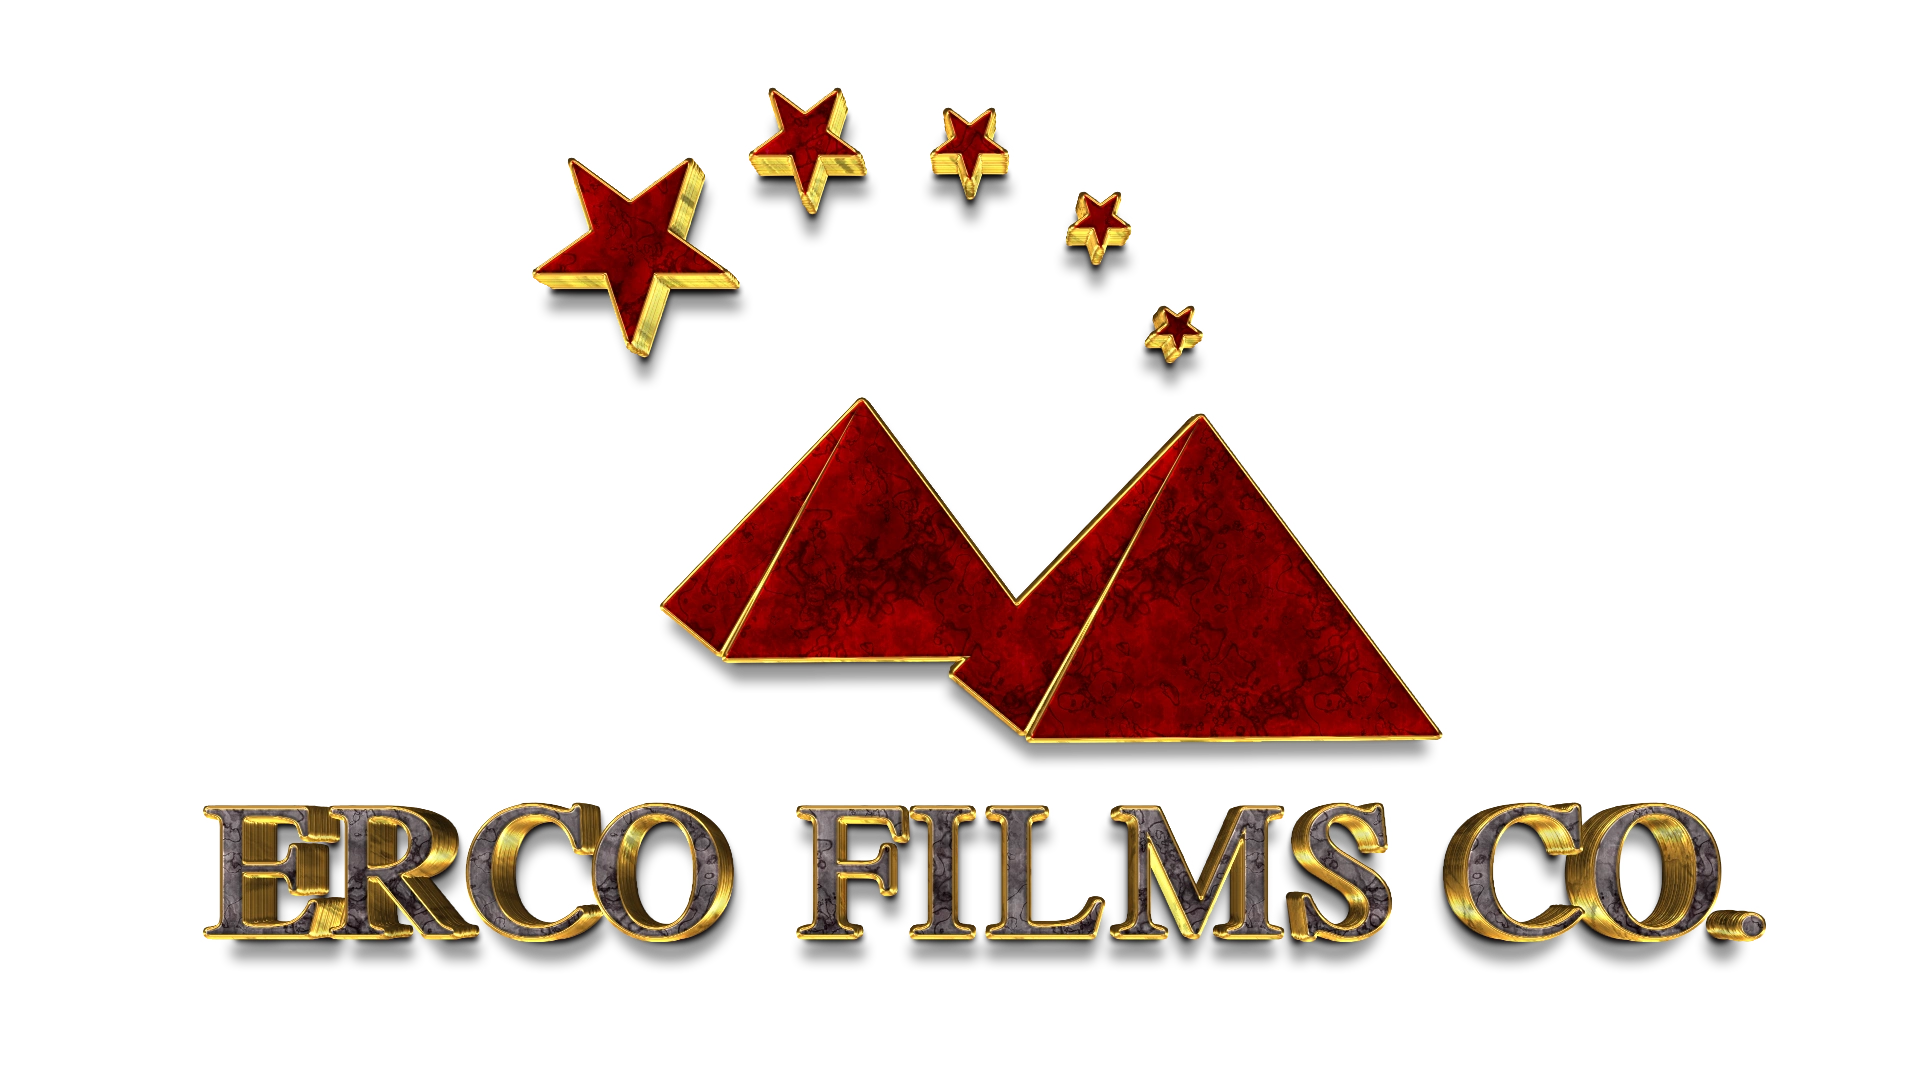 erco films co logo